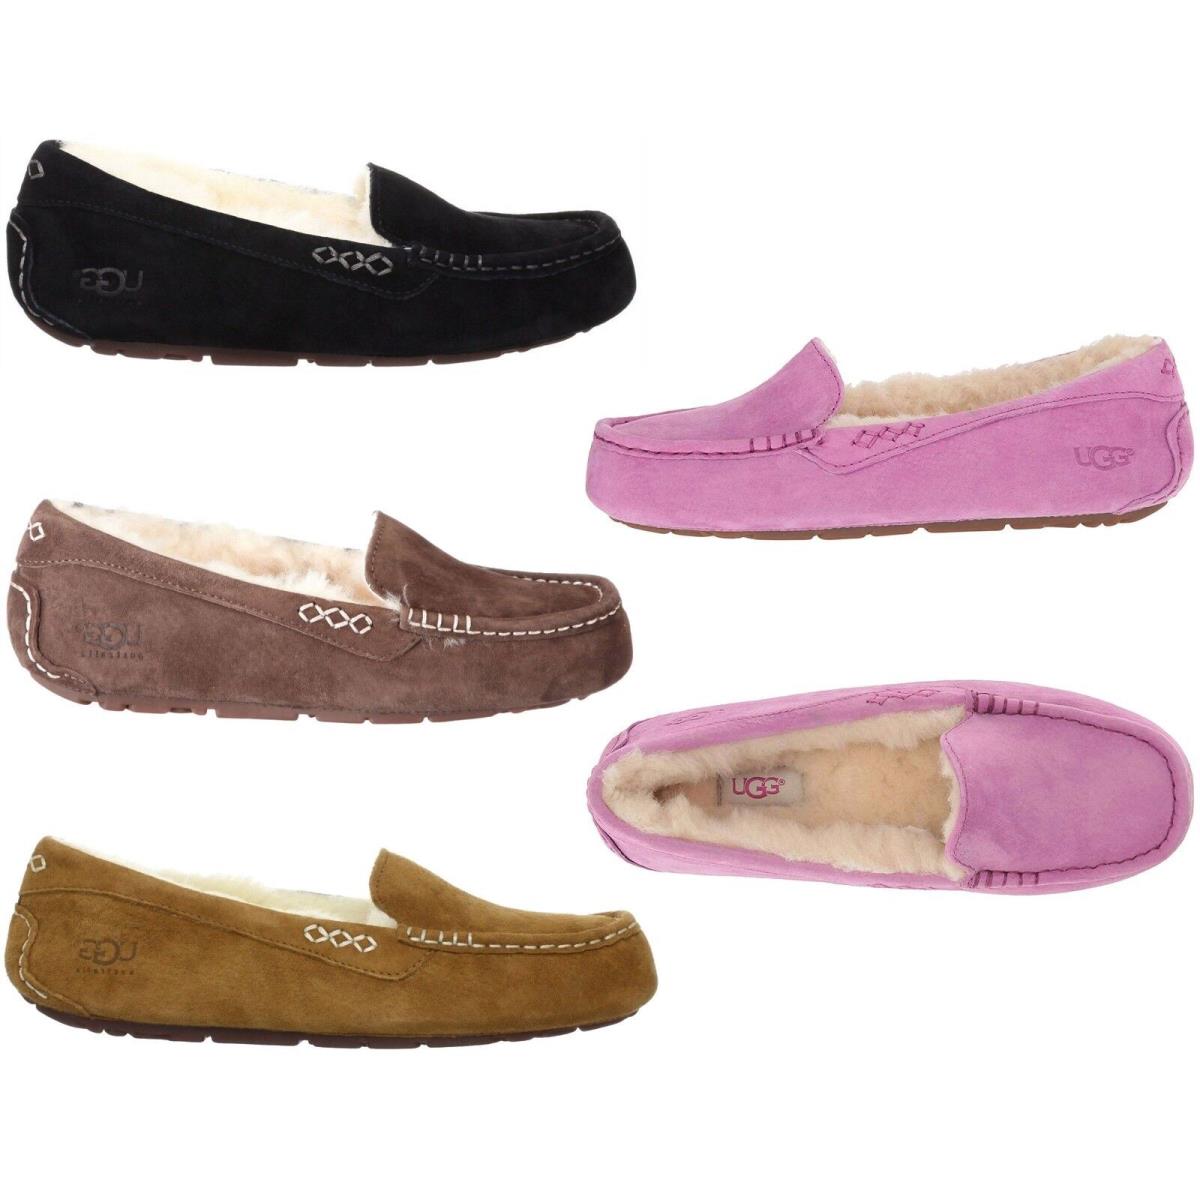 Ugg Australia Women Ansley Slipper Shoes Slip On Comfort Home Moccasins